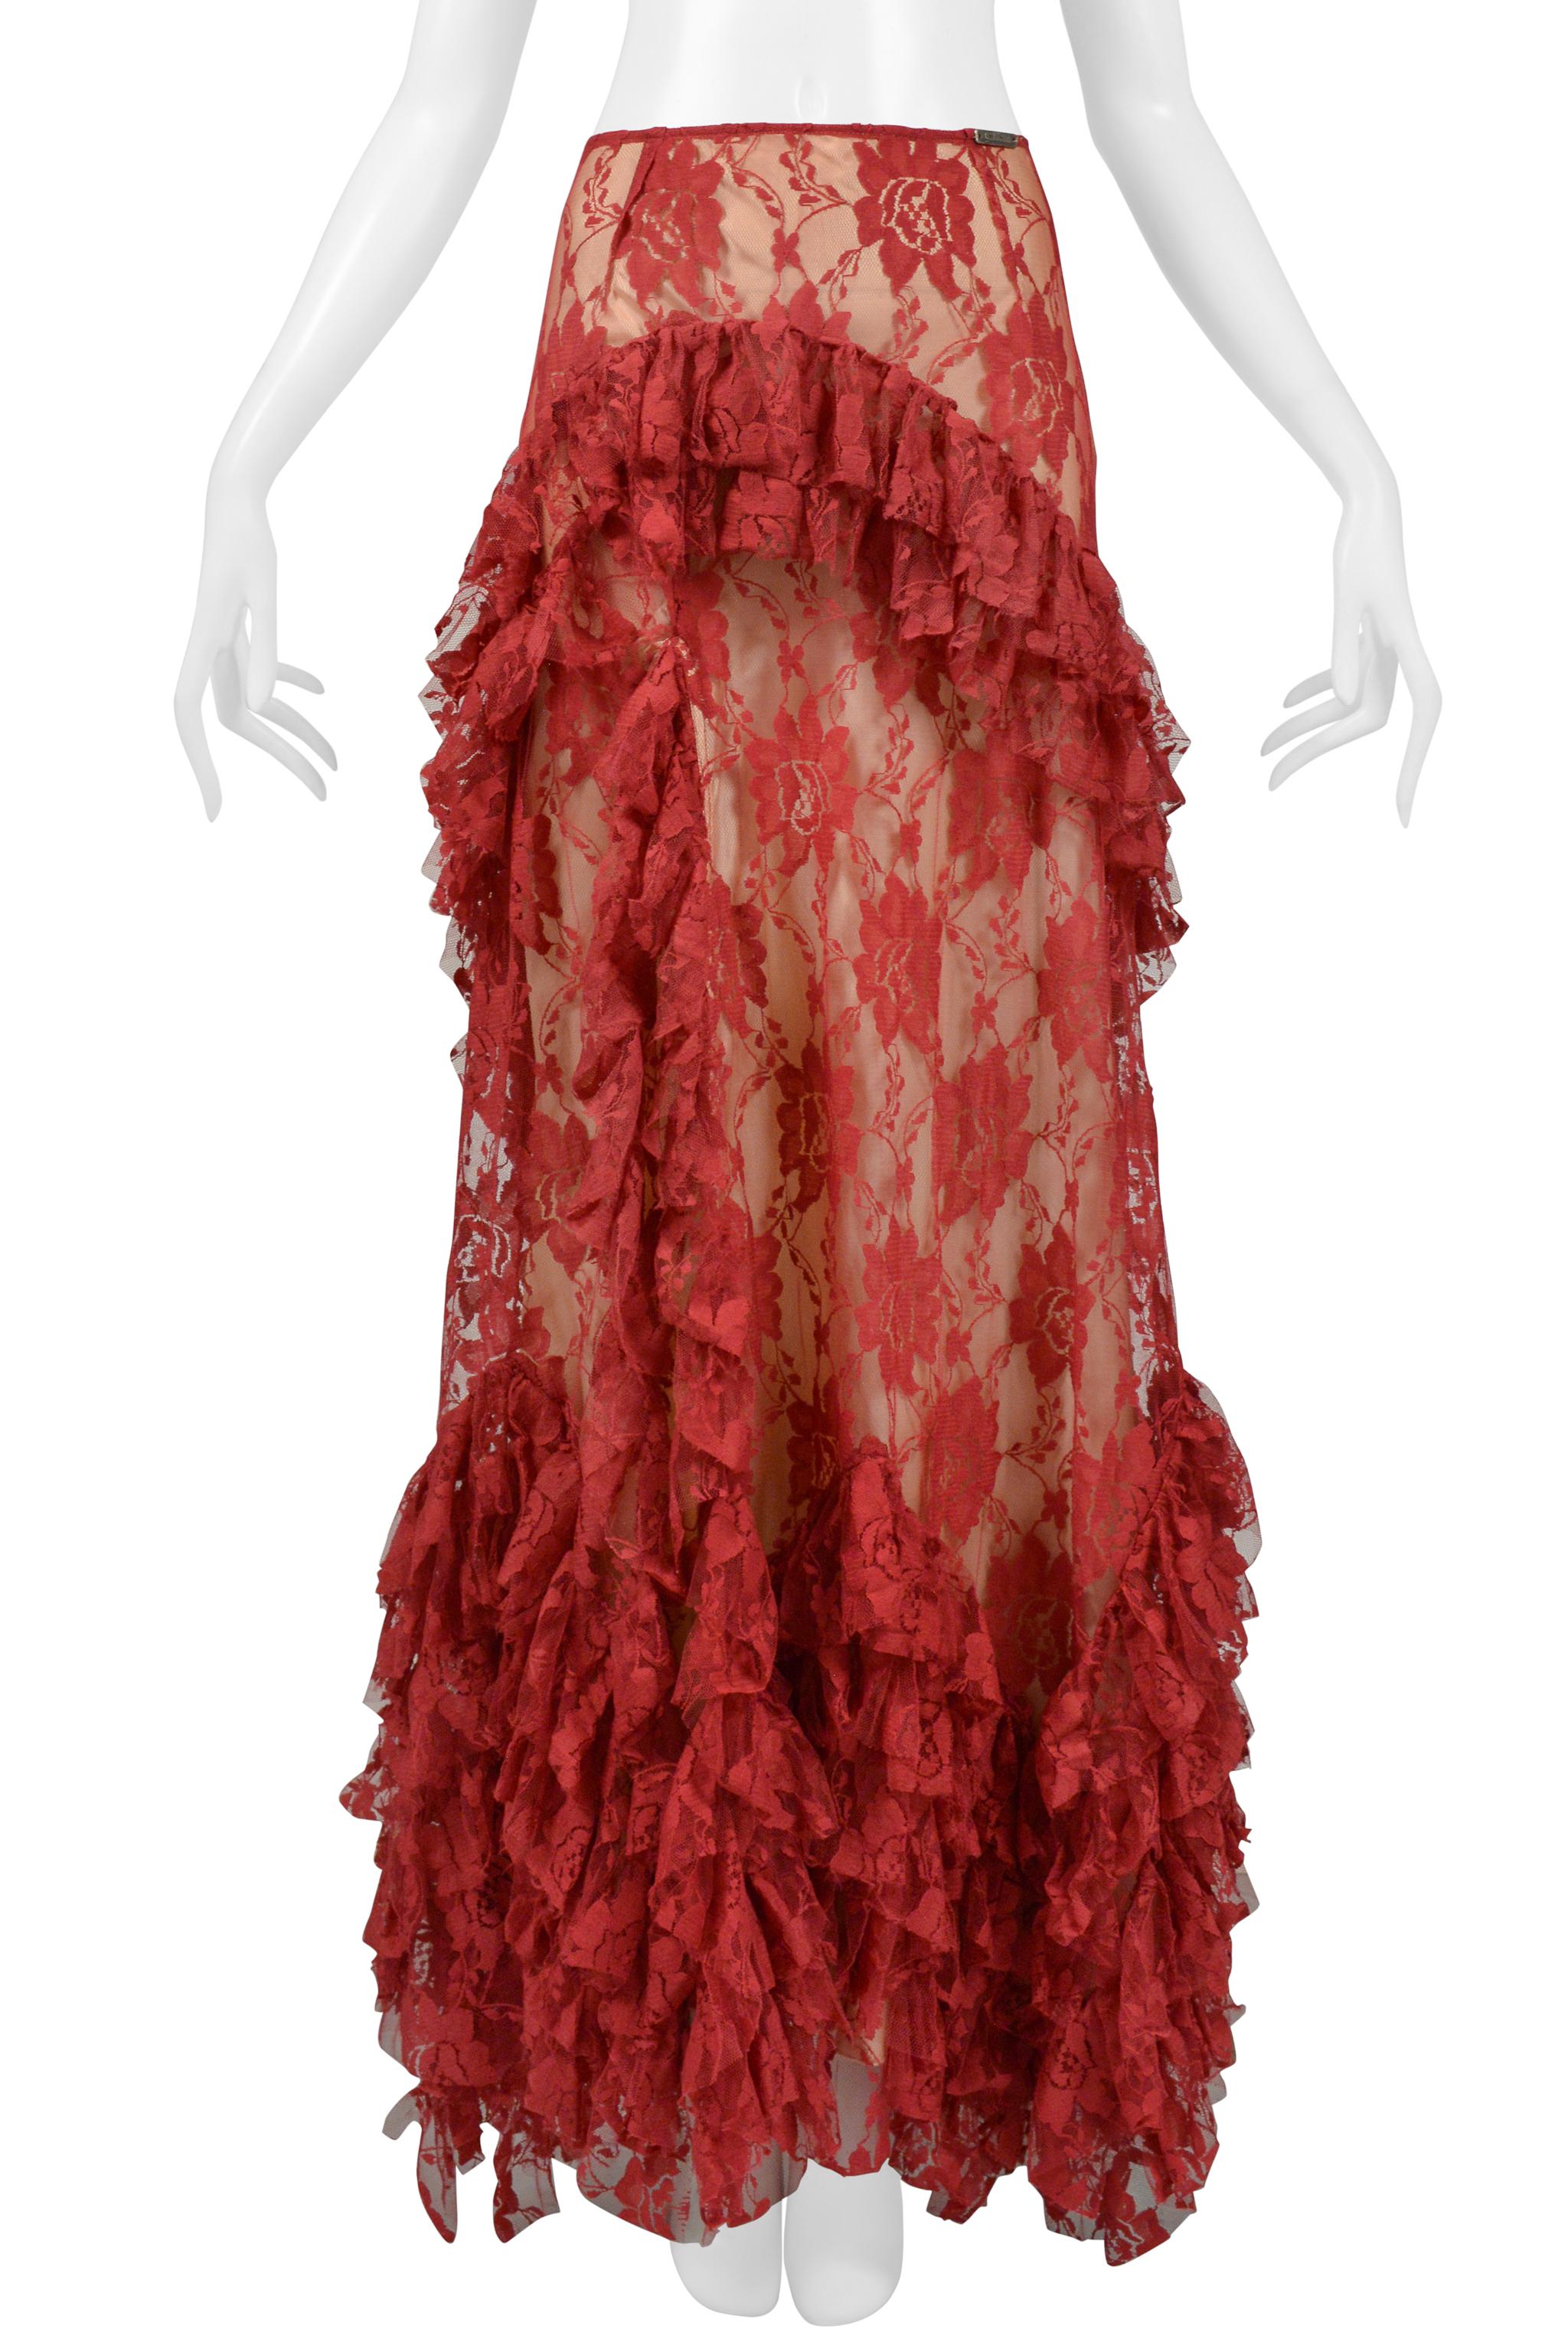 John Galliano Burgundy Lace Ballgown Skirt & Corset Top For Sale 1